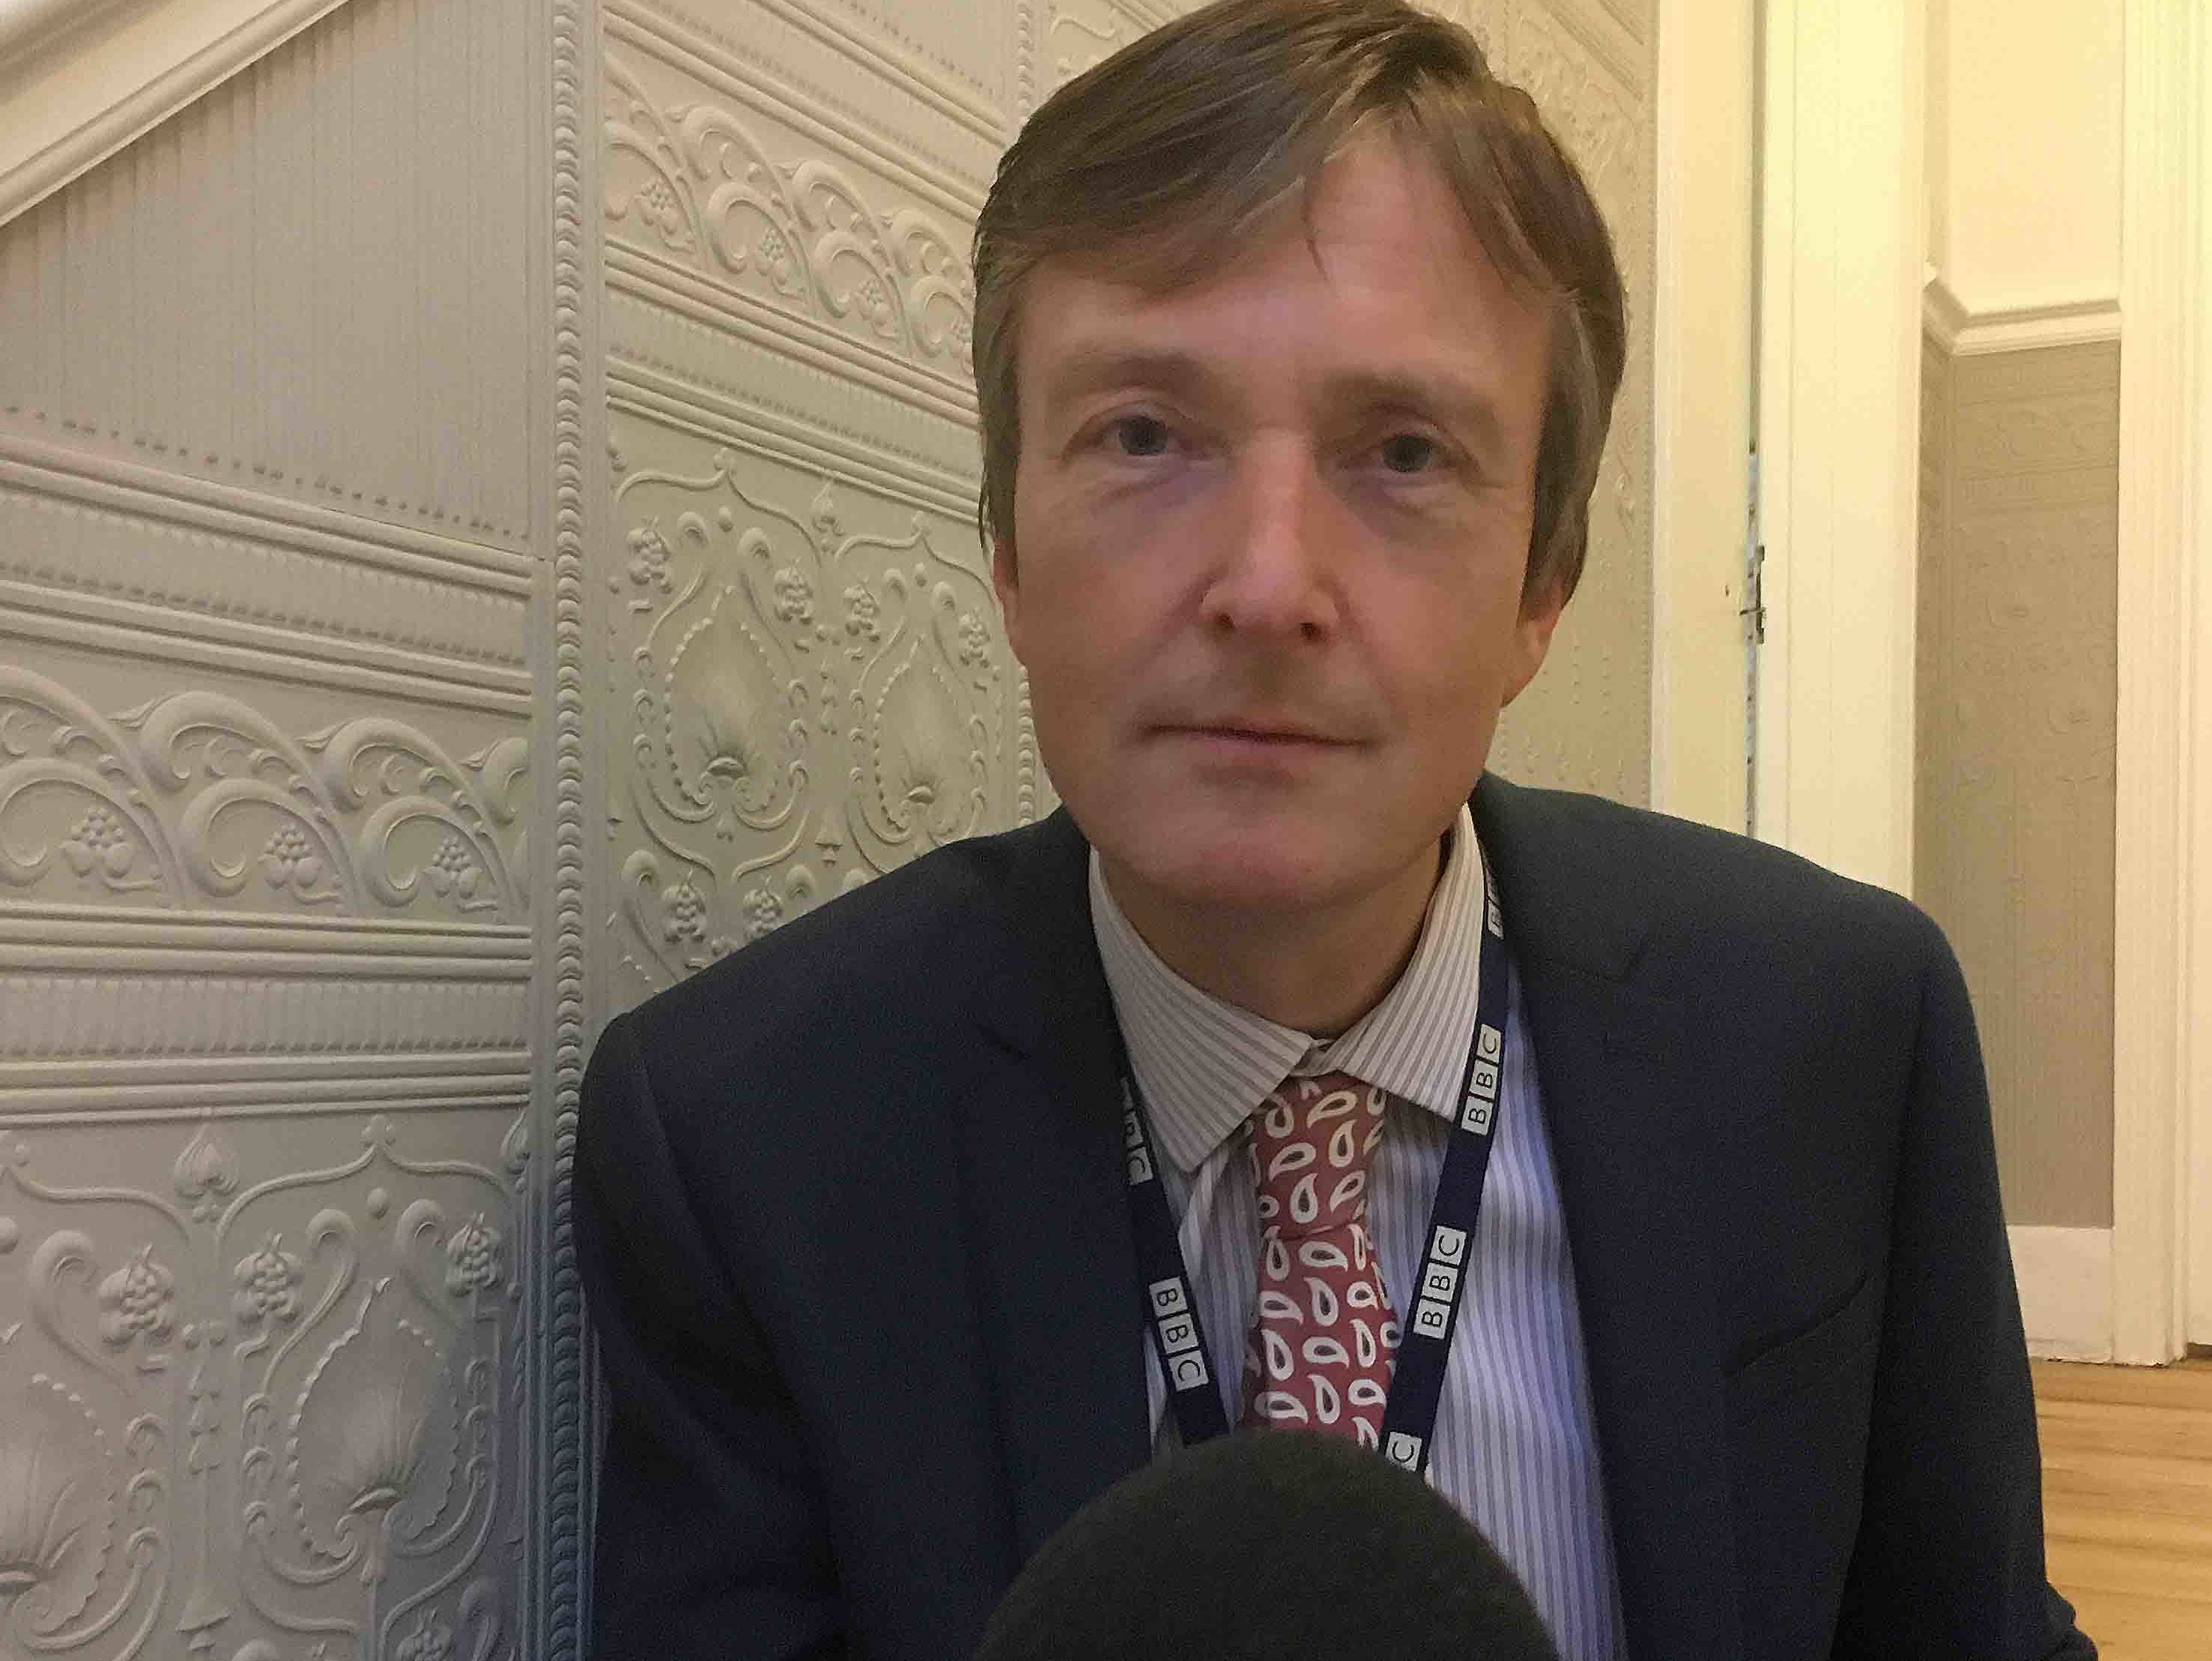 Diabetic BBC newsreader explains how low sugar levels left him talking 'gibberish' live on radio